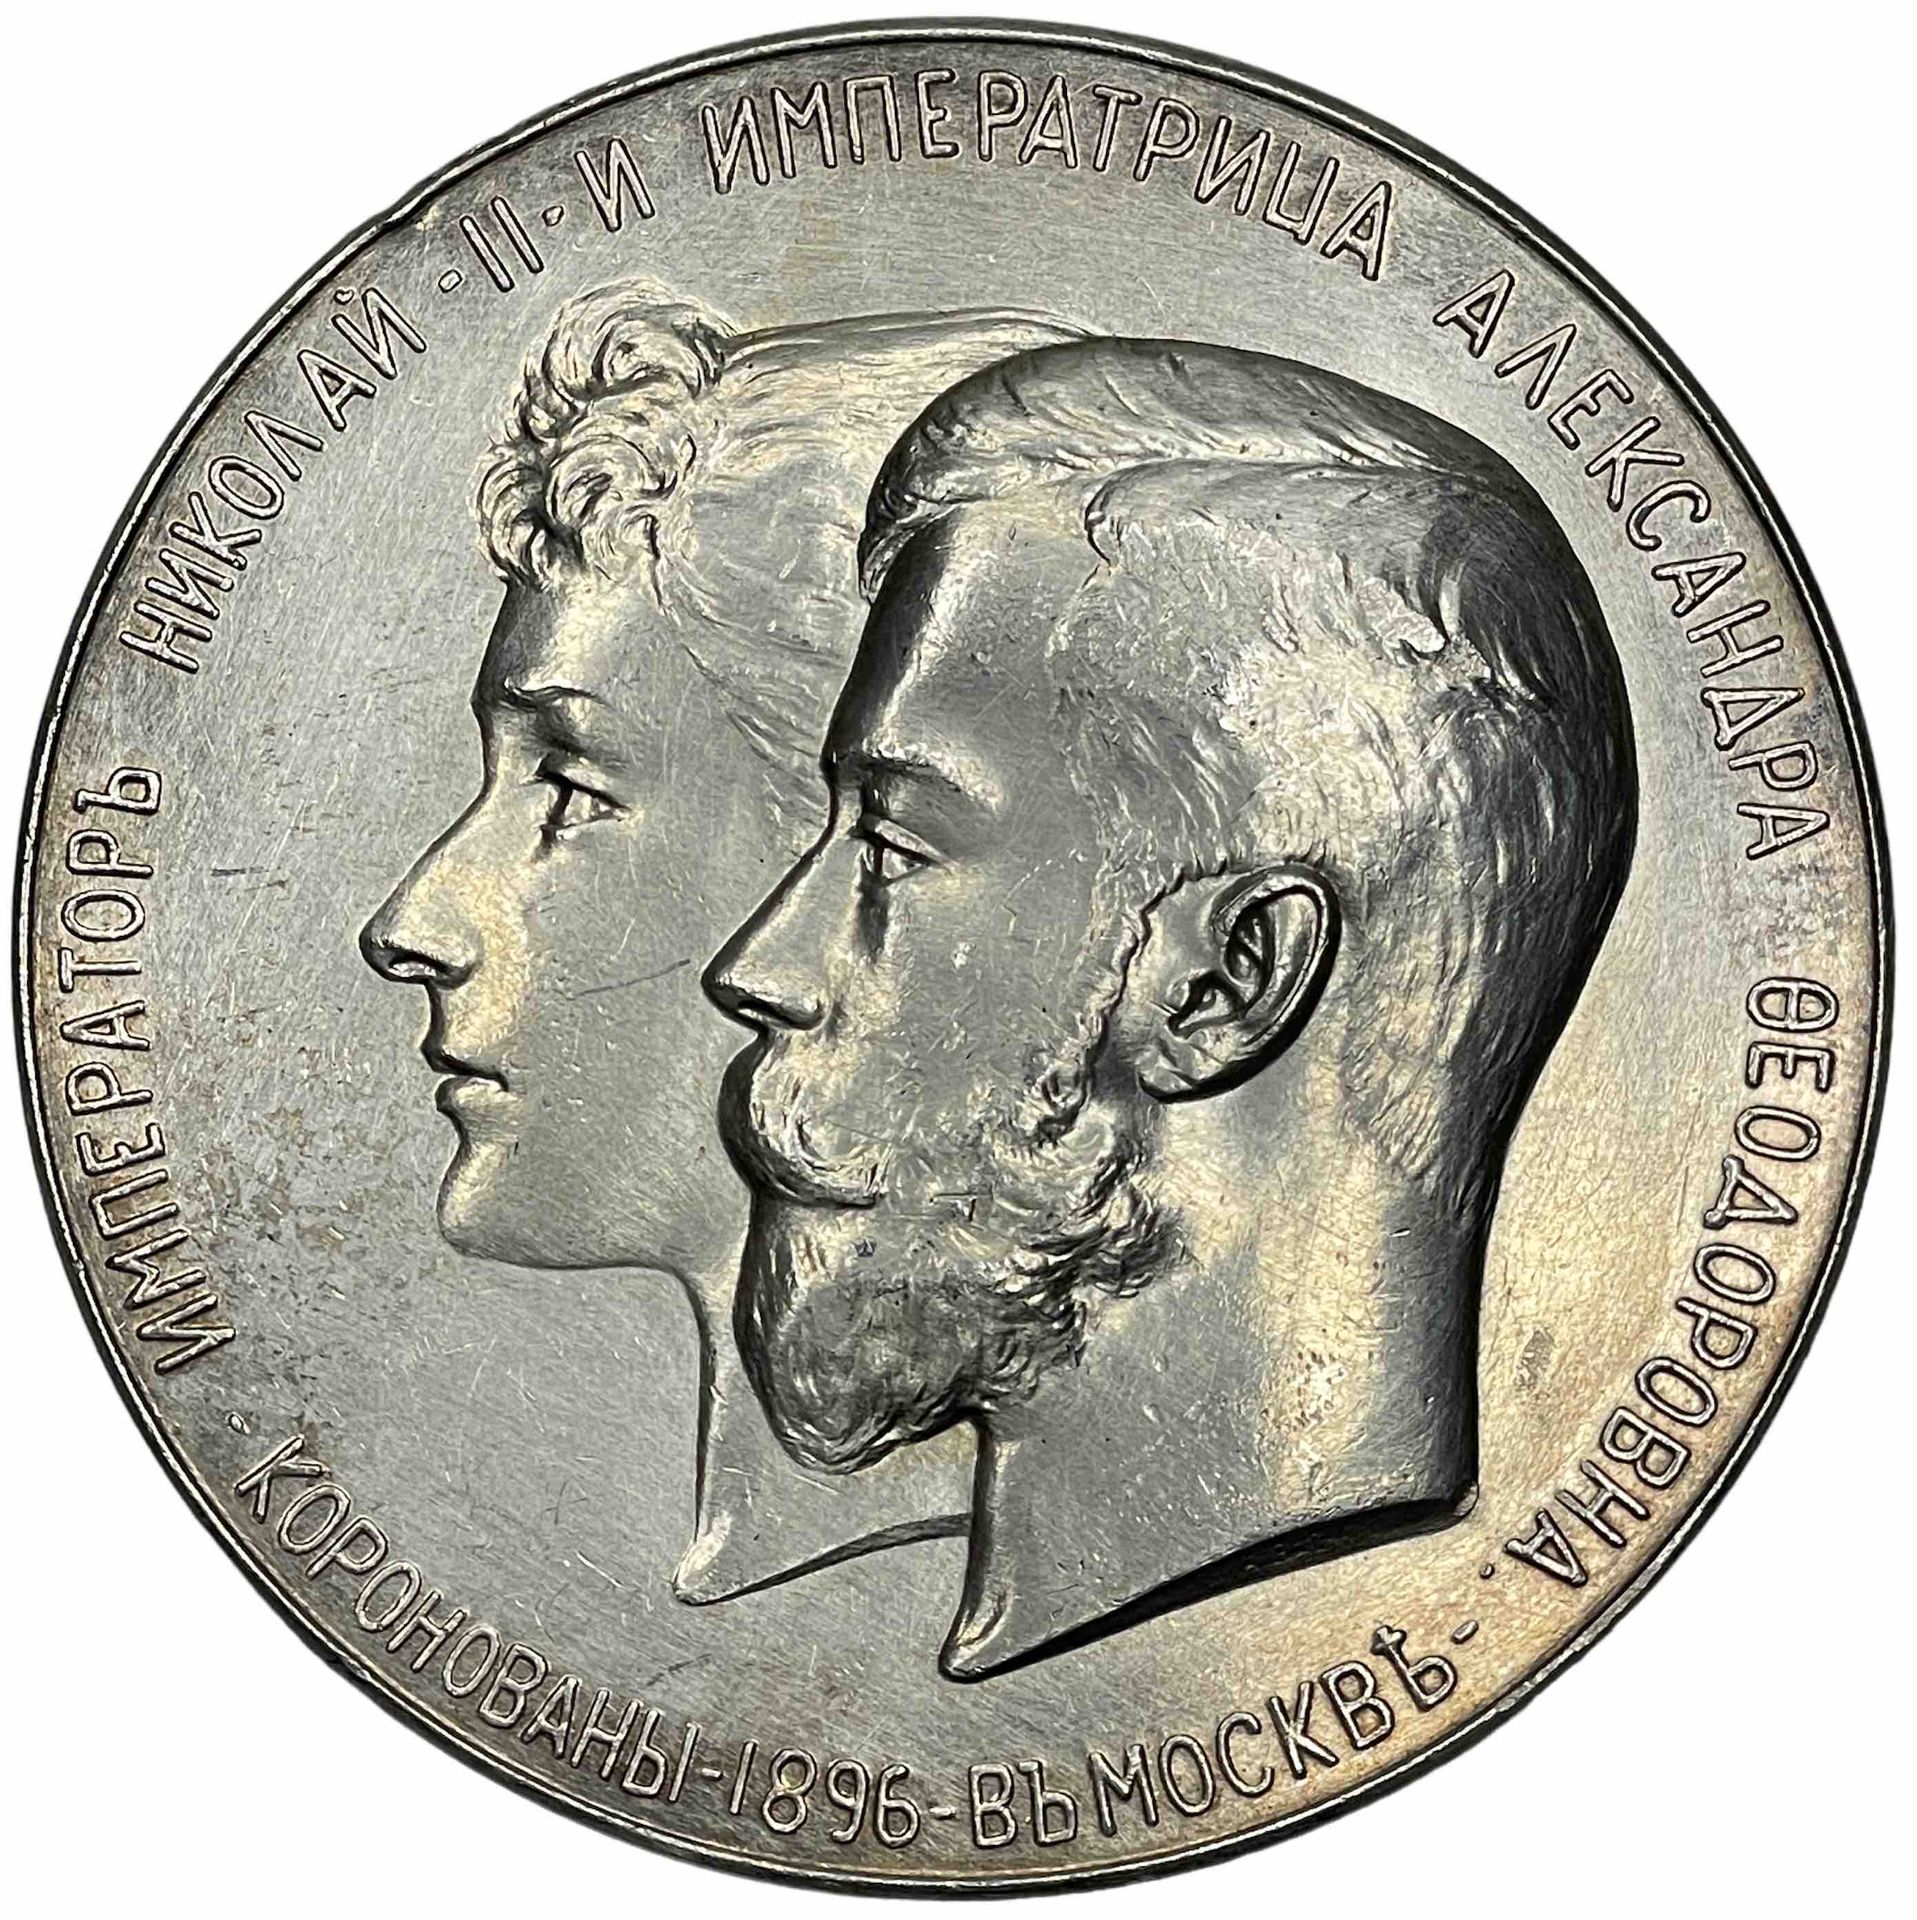 Null 尼古拉二世和亚历山德拉-费奥多罗夫娜的加冕纪念章。
1896年，银质，直径：6.5厘米，重135克。B.E.

ЕДАЛЬ в честь корон&hellip;